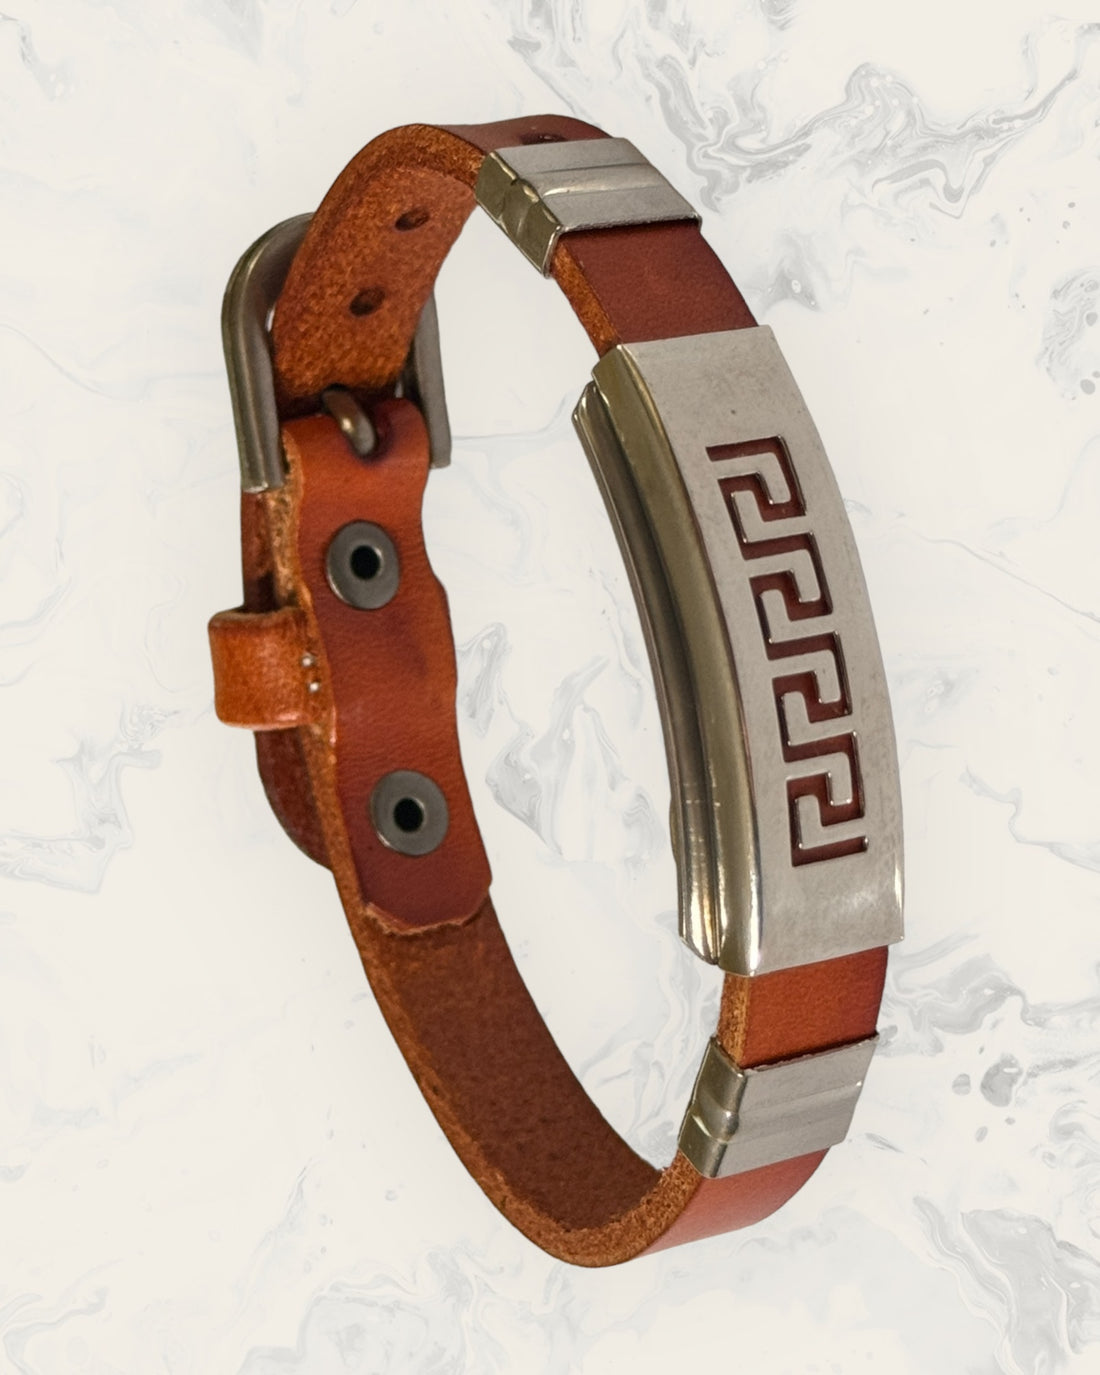 Natural Pain Relief and EMF Protection Bracelet Leather Band Color Burnt Orange with Greek Key design on a silver metal slider